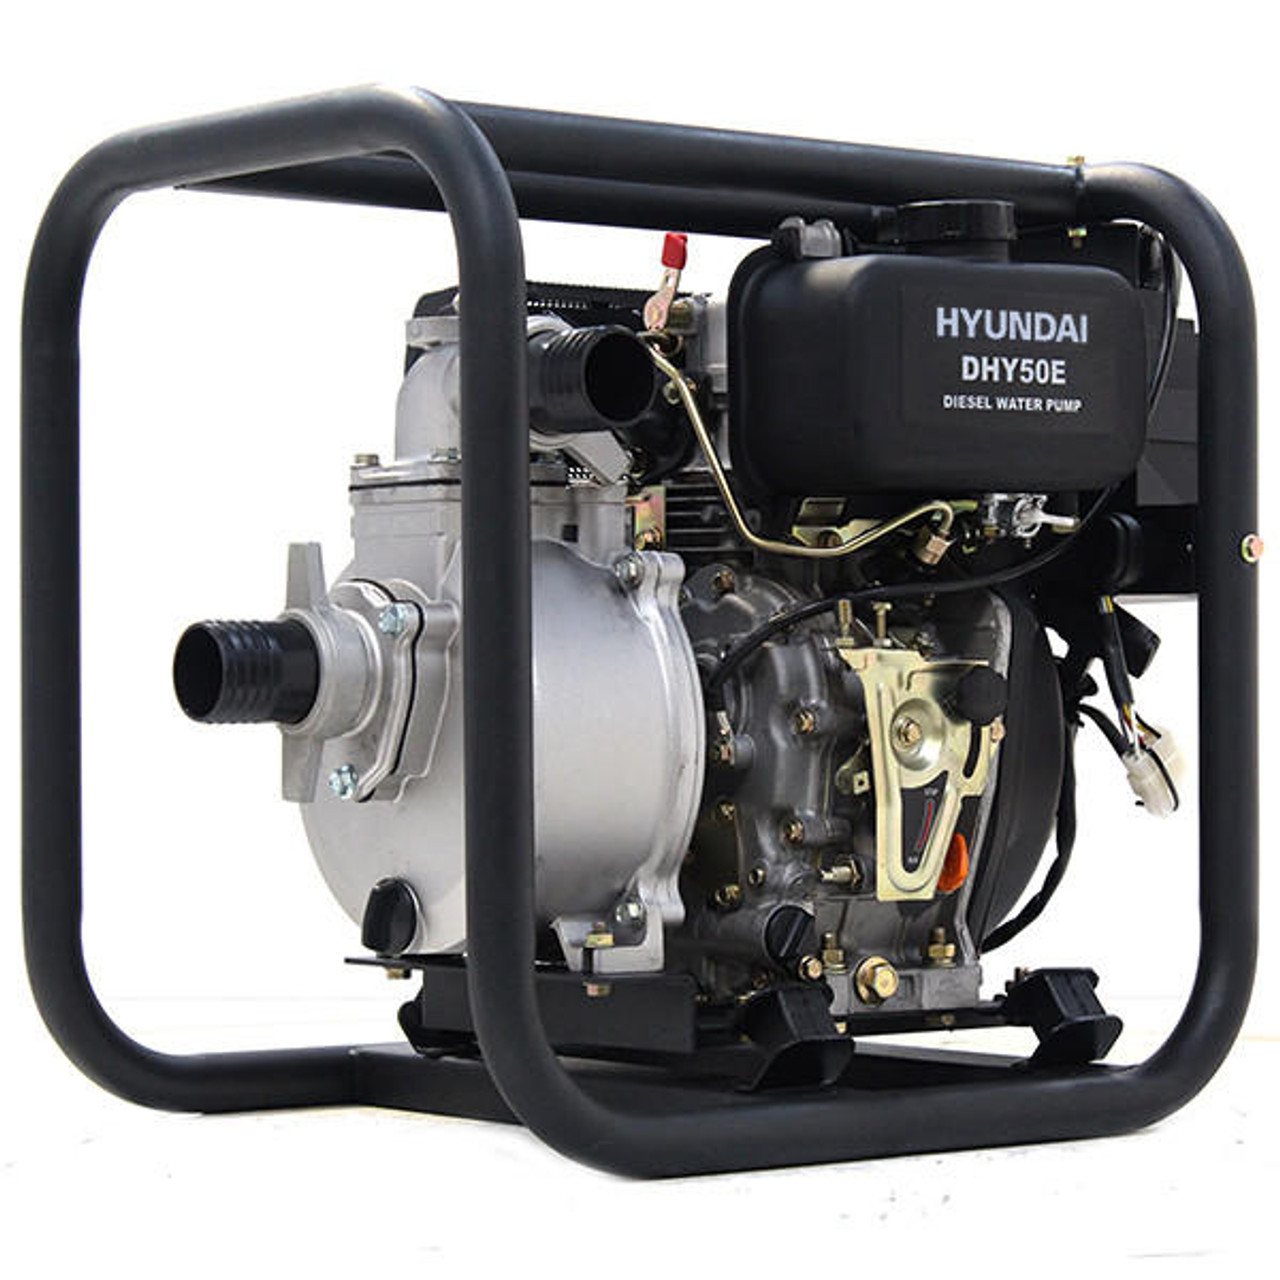 Hyundai 50mm 2''Diesel Water Pump, 25m Total Head, 8m Lift, 600L